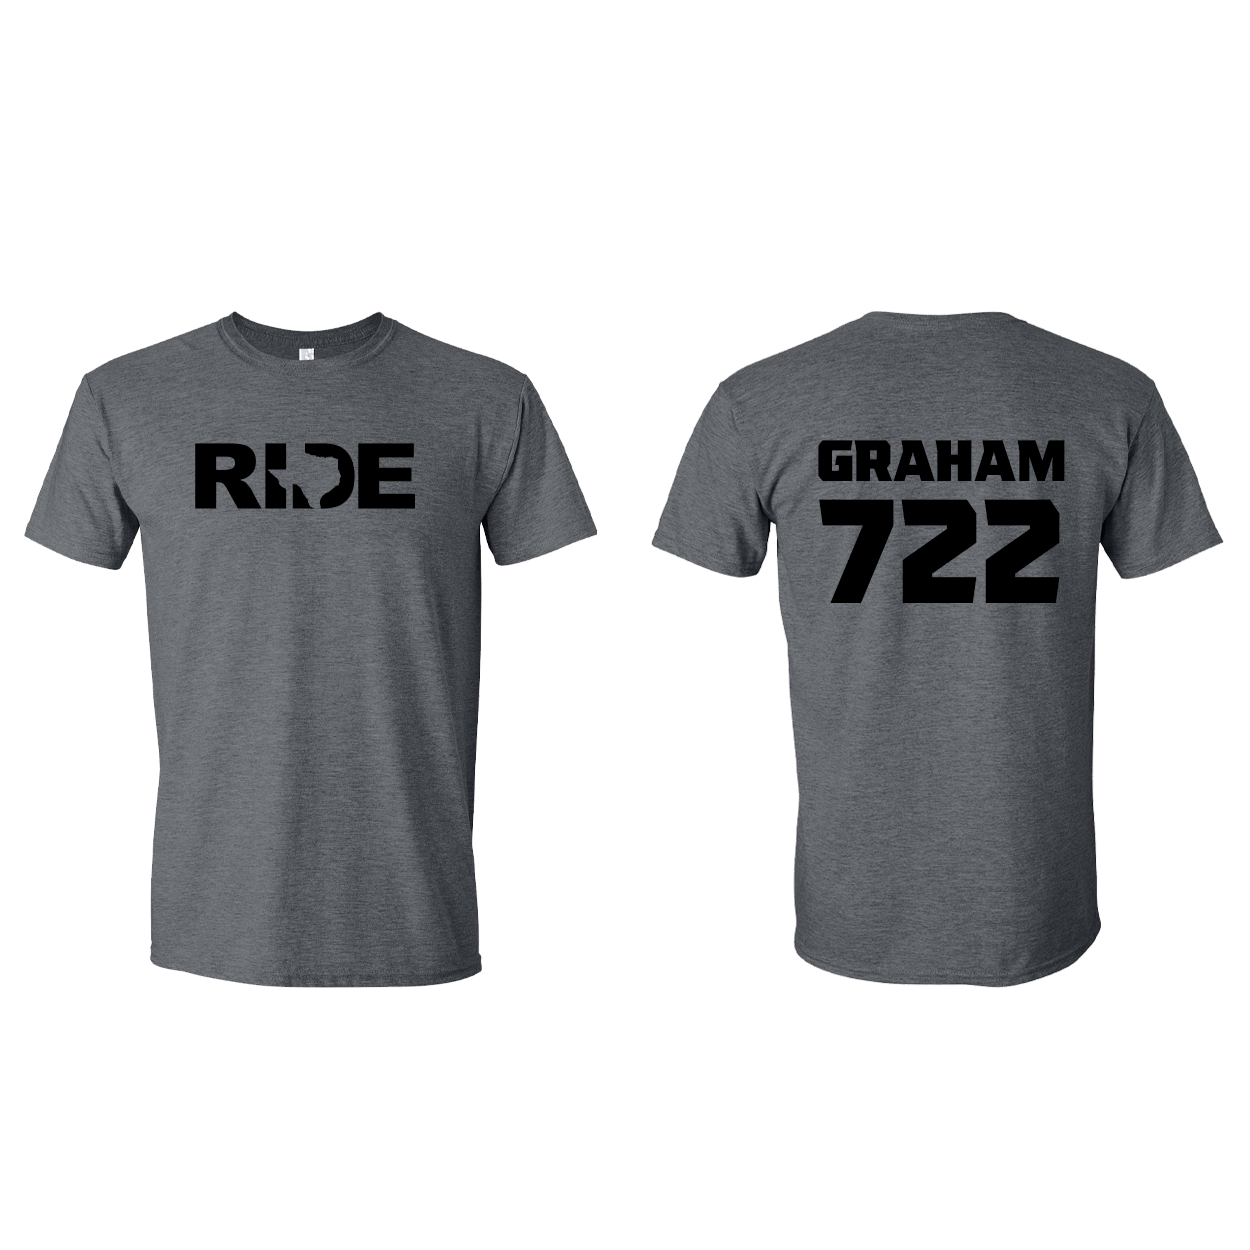 FXR BMX Race Team Classic Athlete Support T-Shirt GRAHAM #722 Dark Heather (Black Logo)